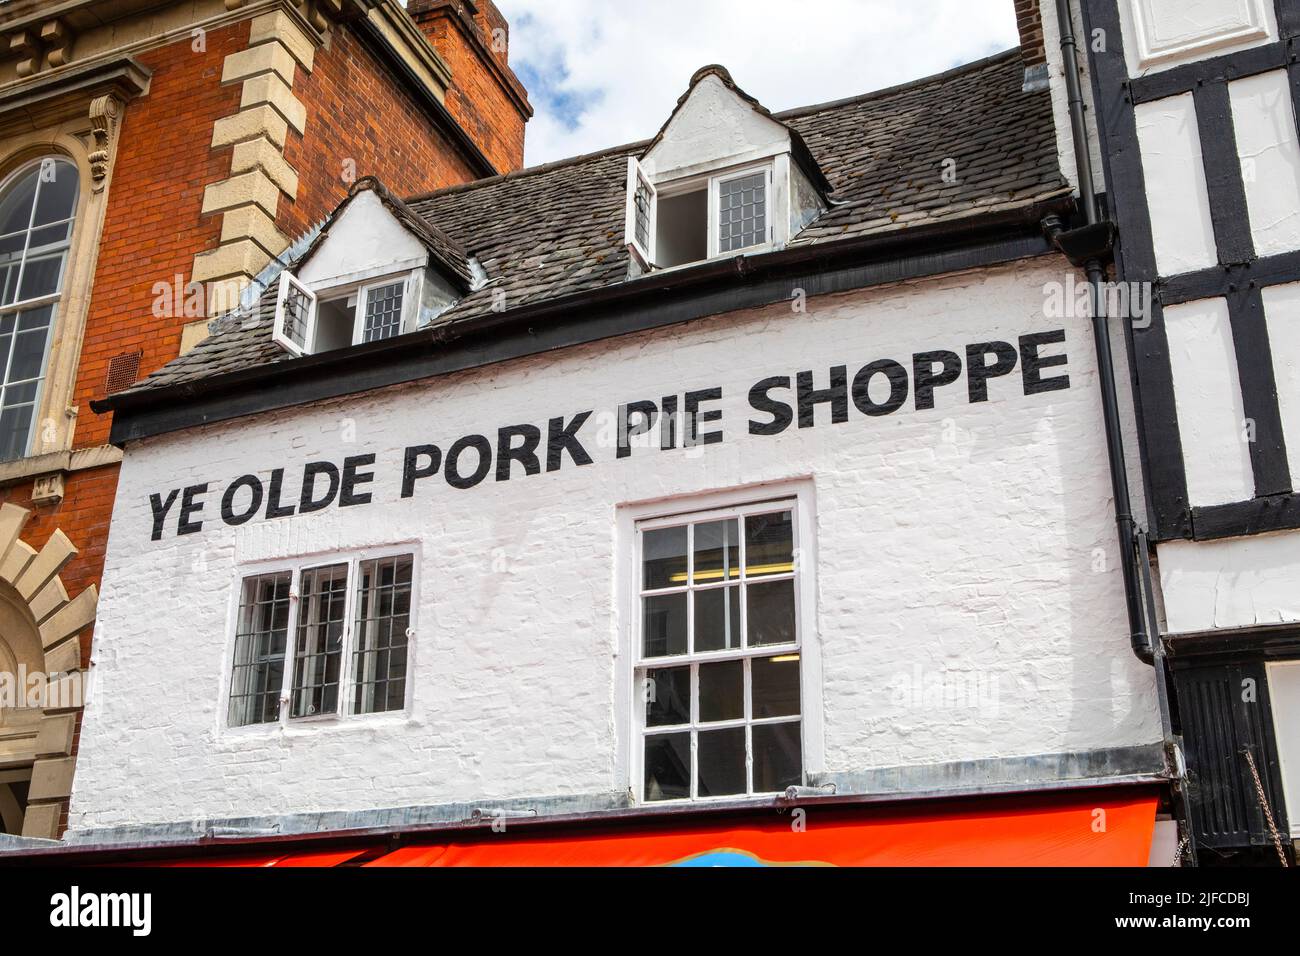 Melton Mowbray, UK - June 11th 2022: Ye Olde Pork Pie Shoppe in Melton Mowbray, Leicestershire, UK. The town is famous for producing the Melton Mowbra Stock Photo